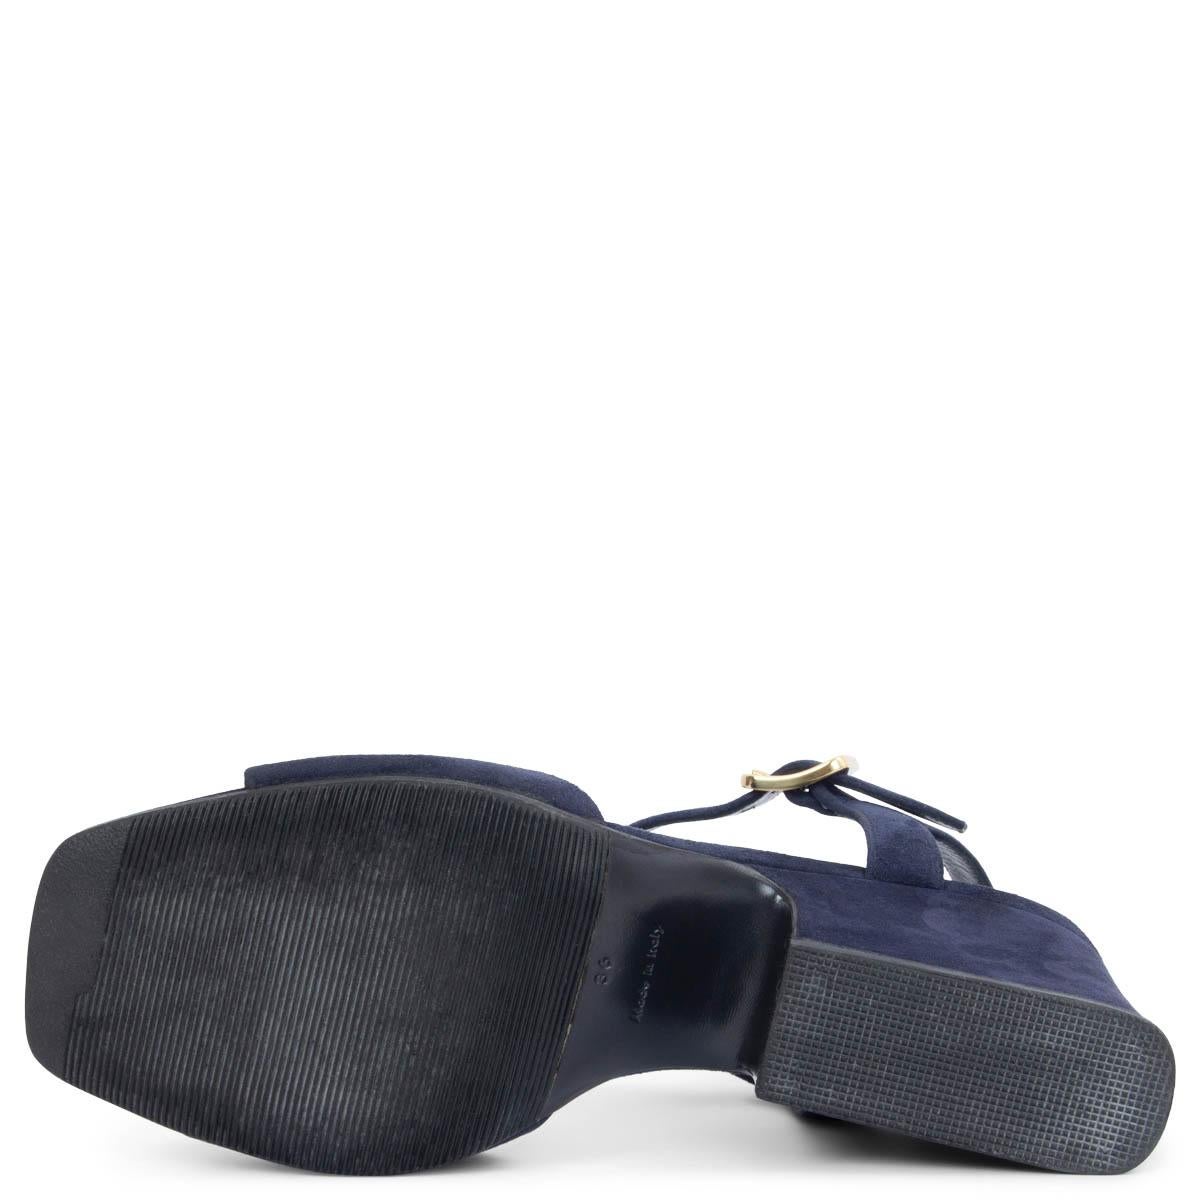 CELINE navy blue suede 2016 BLOCK HEEL Sandals Shoes 36 For Sale 1